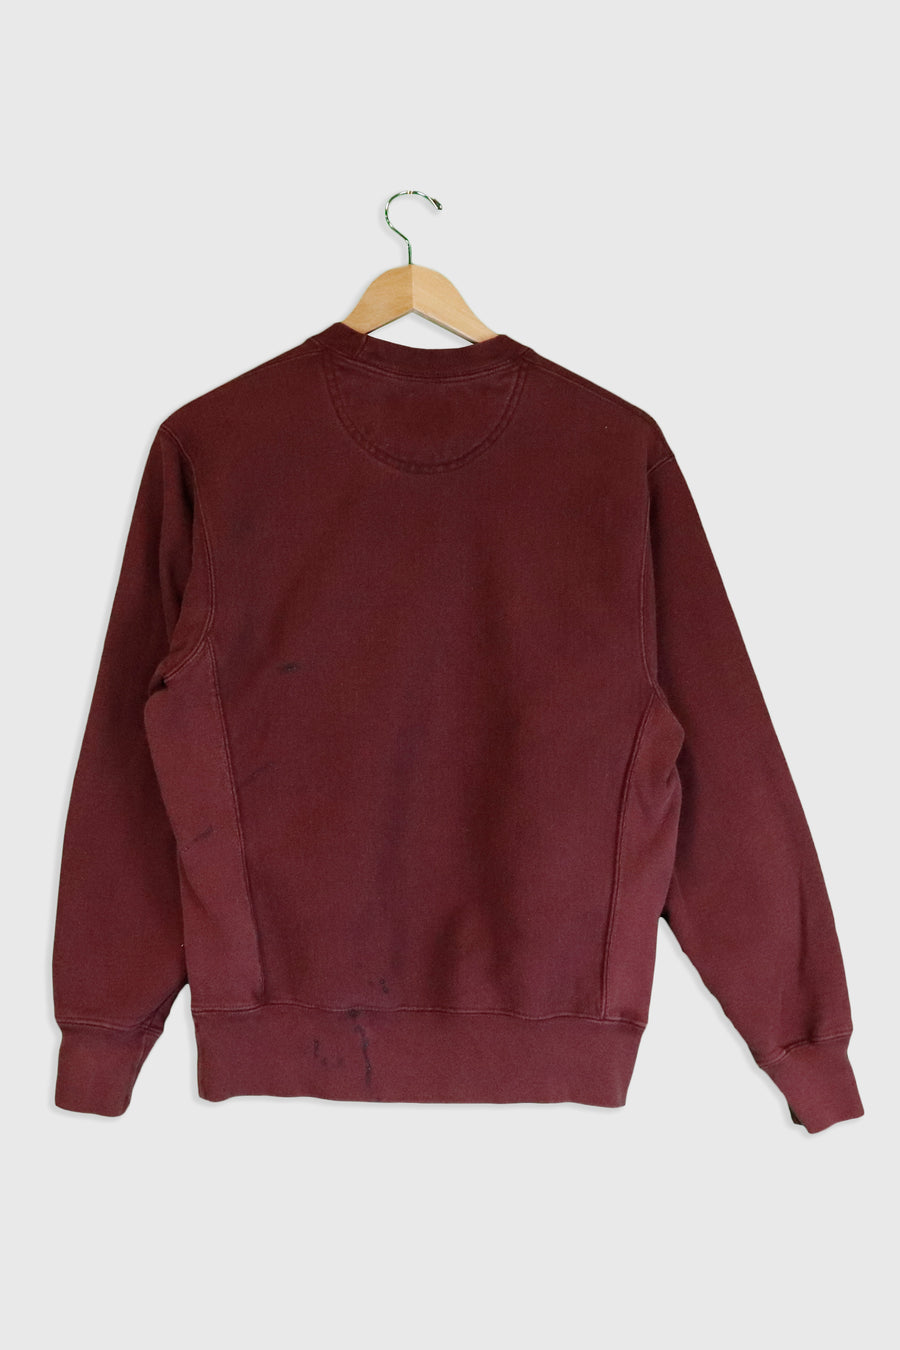 Vintage Champion Bard College Sweatshirt Sz M